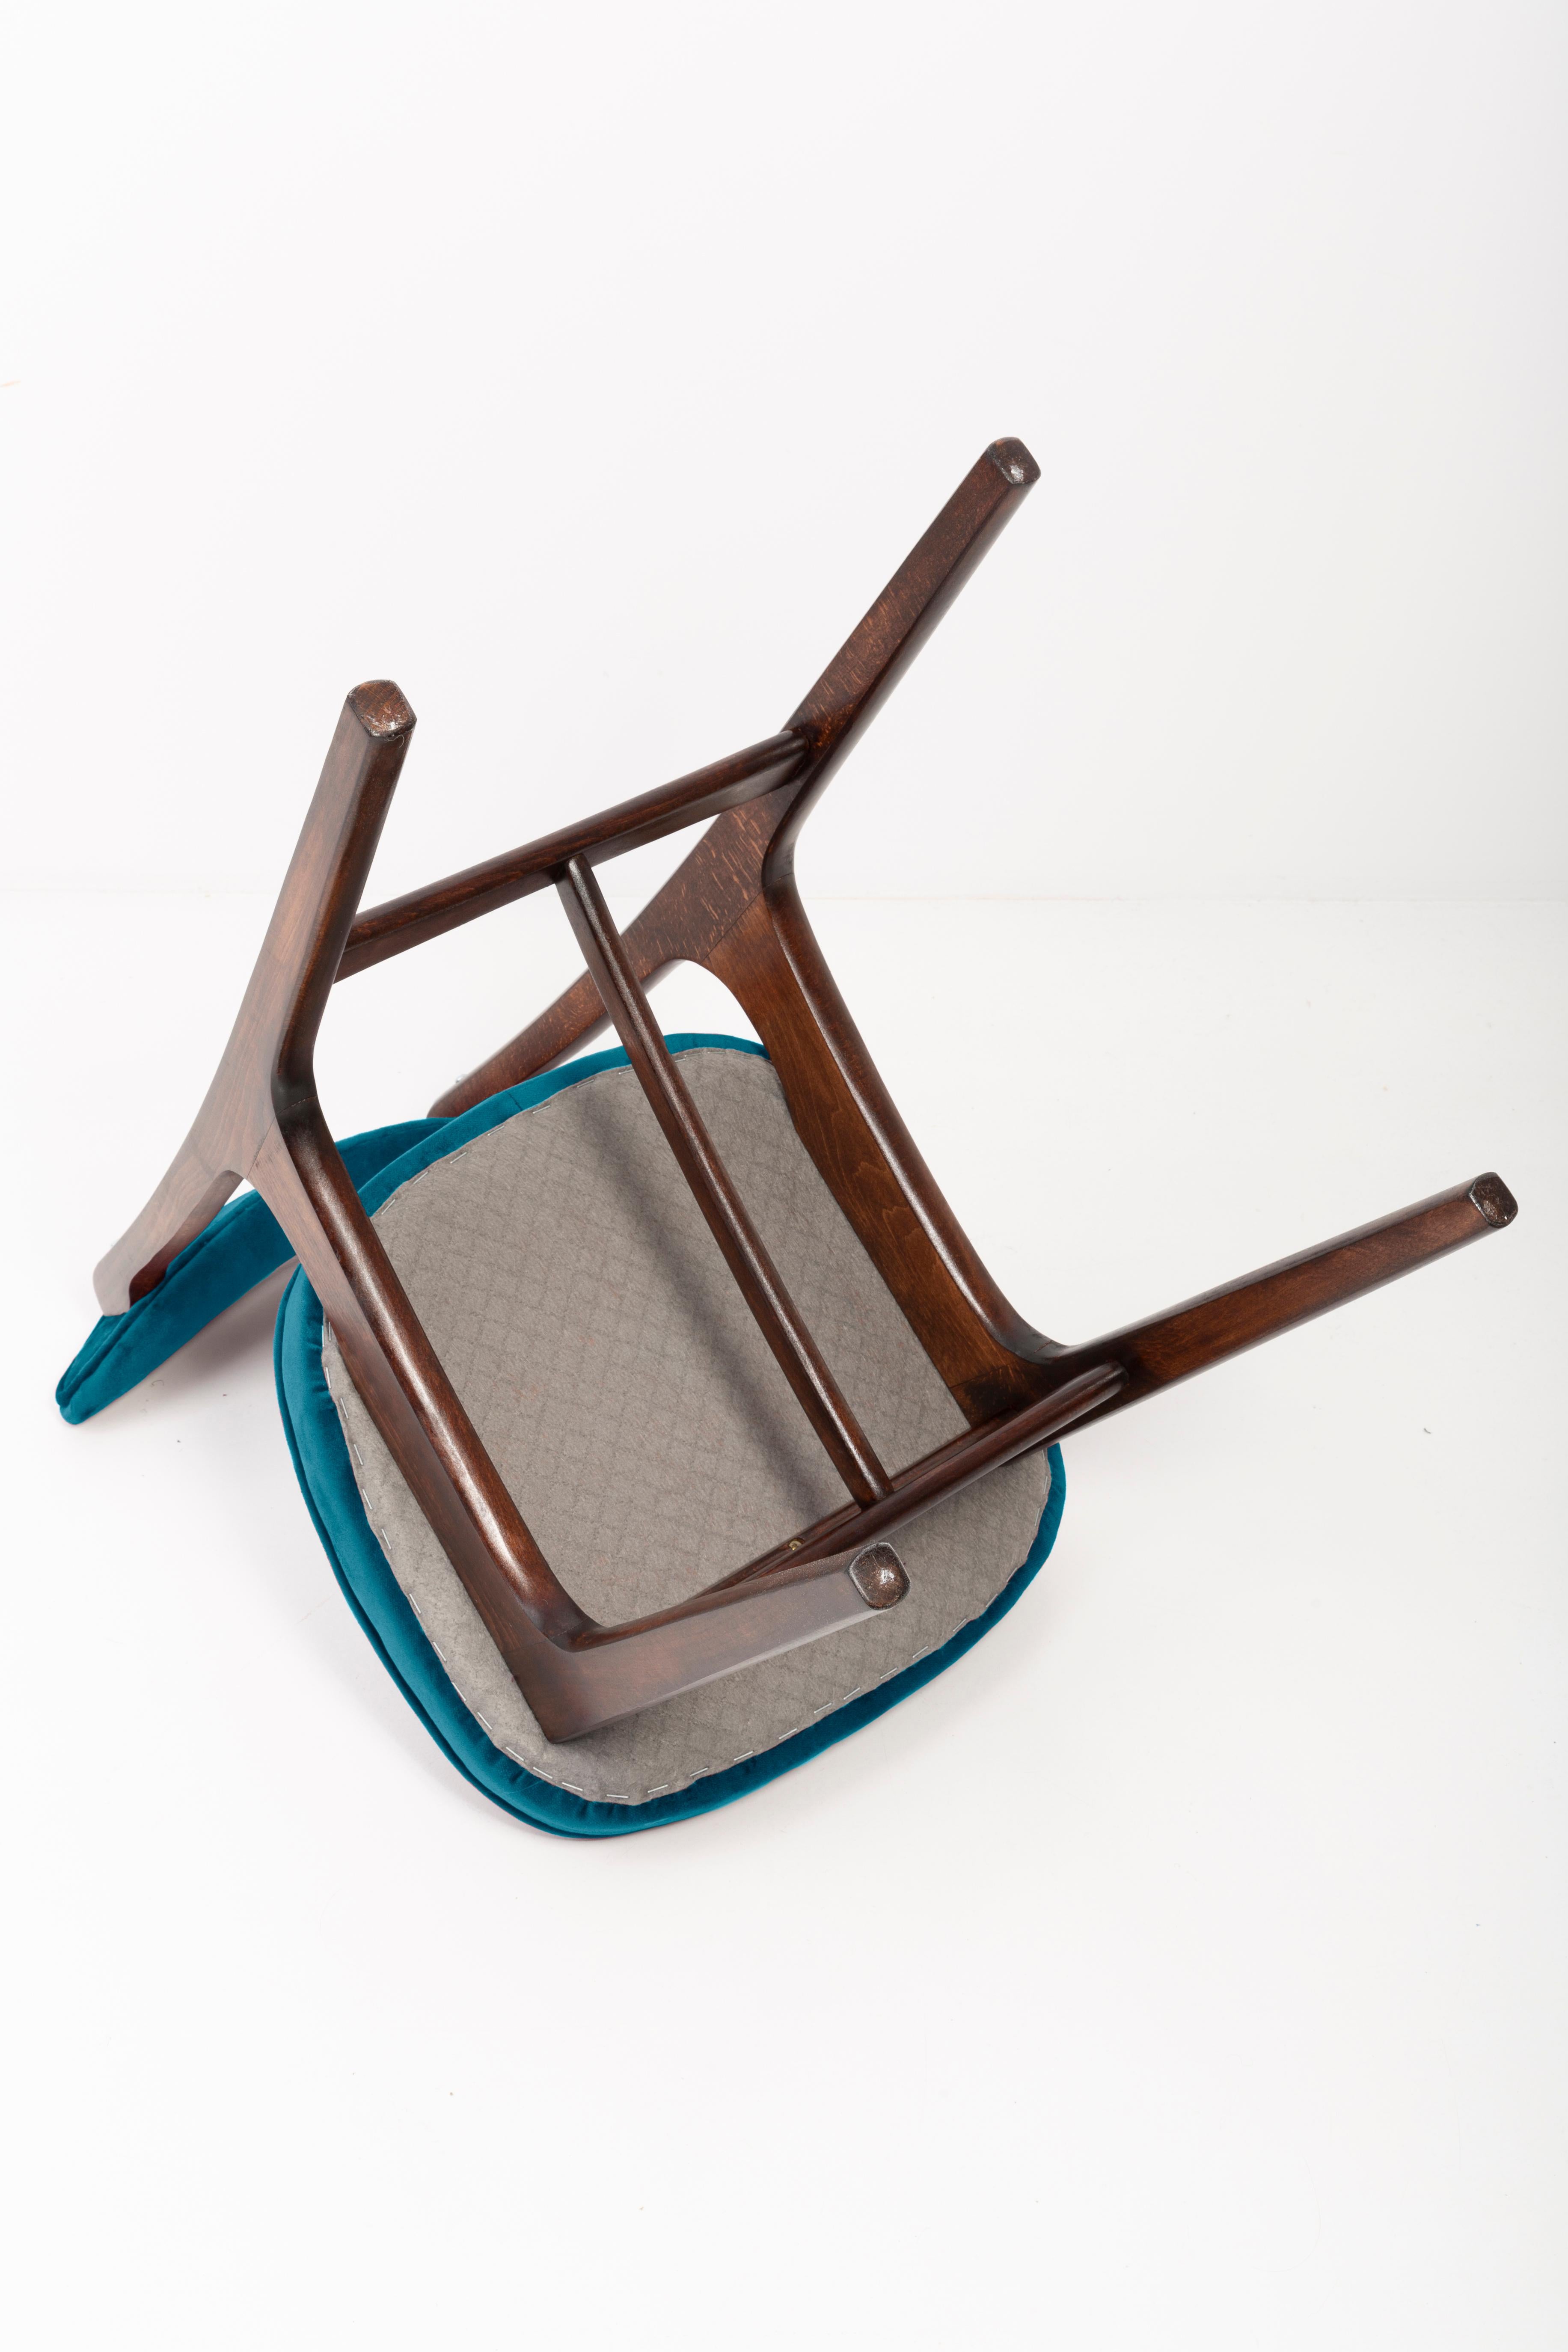 Textile Mid Century Petrol Blue Velvet Chair designed by Rajmund Halas, Europe, 1960s For Sale